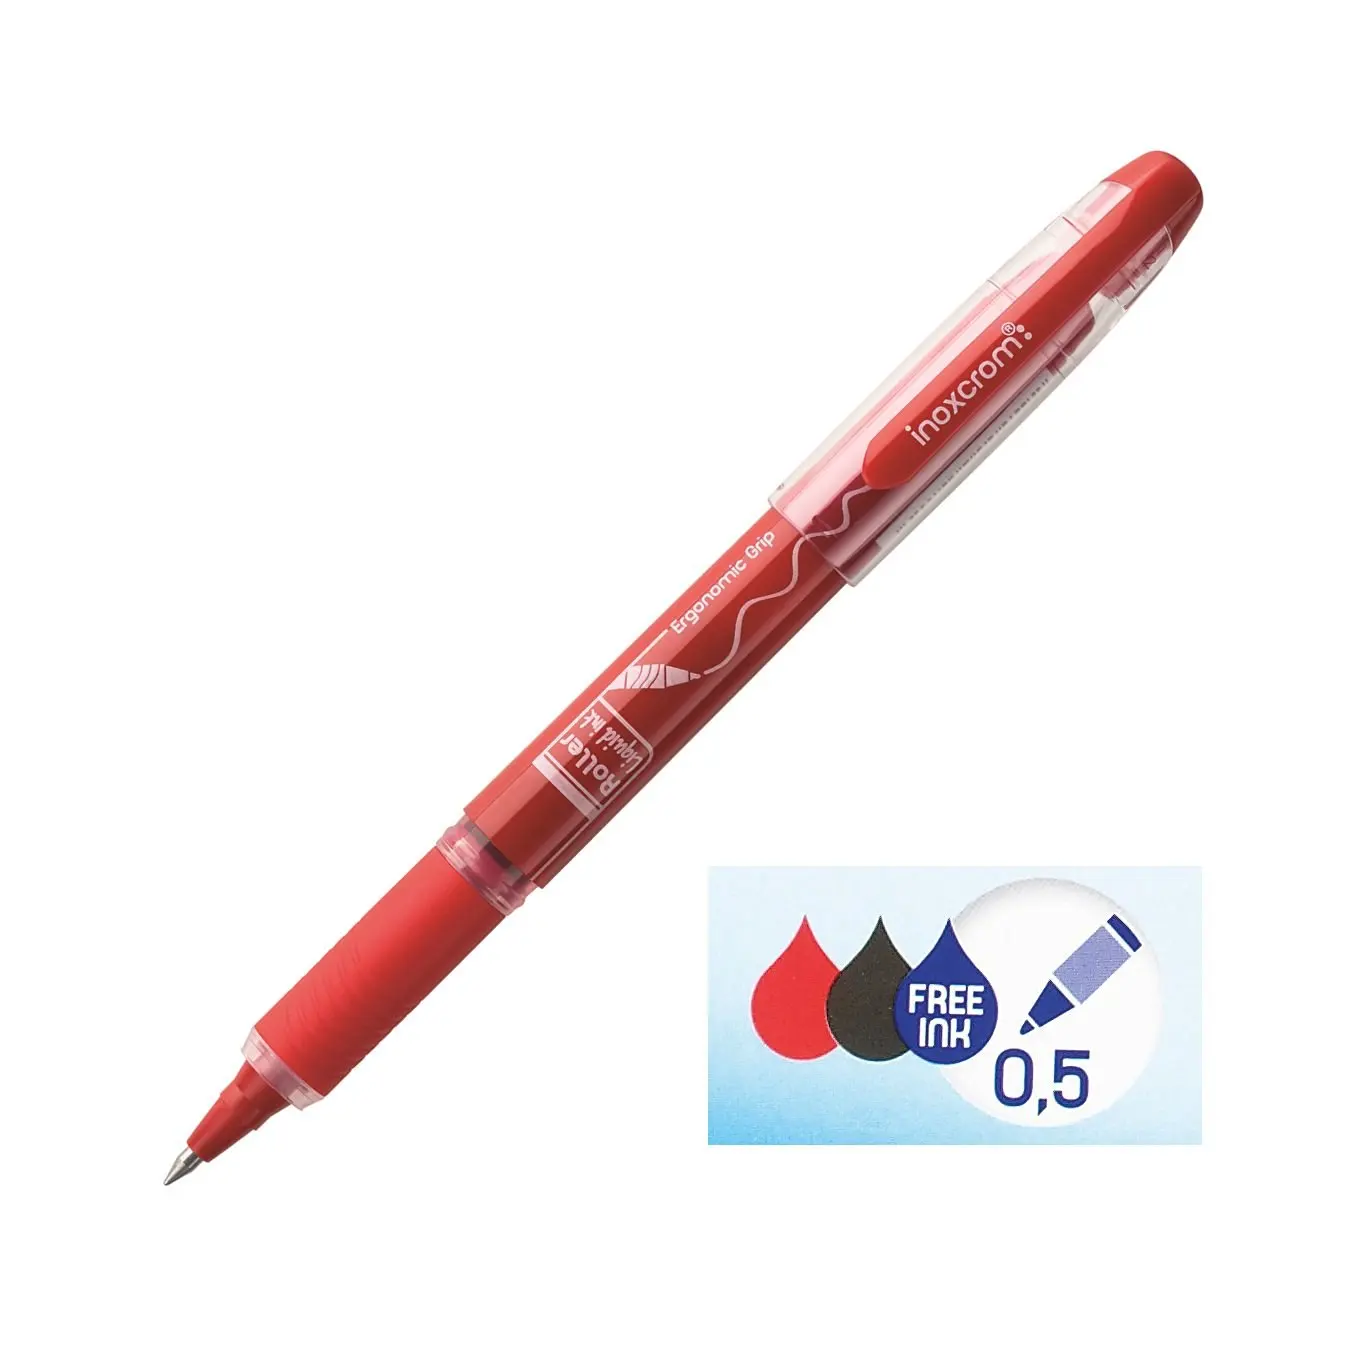 Bolígrafo y pluma estilográfica Tiny by inoxcrom de 